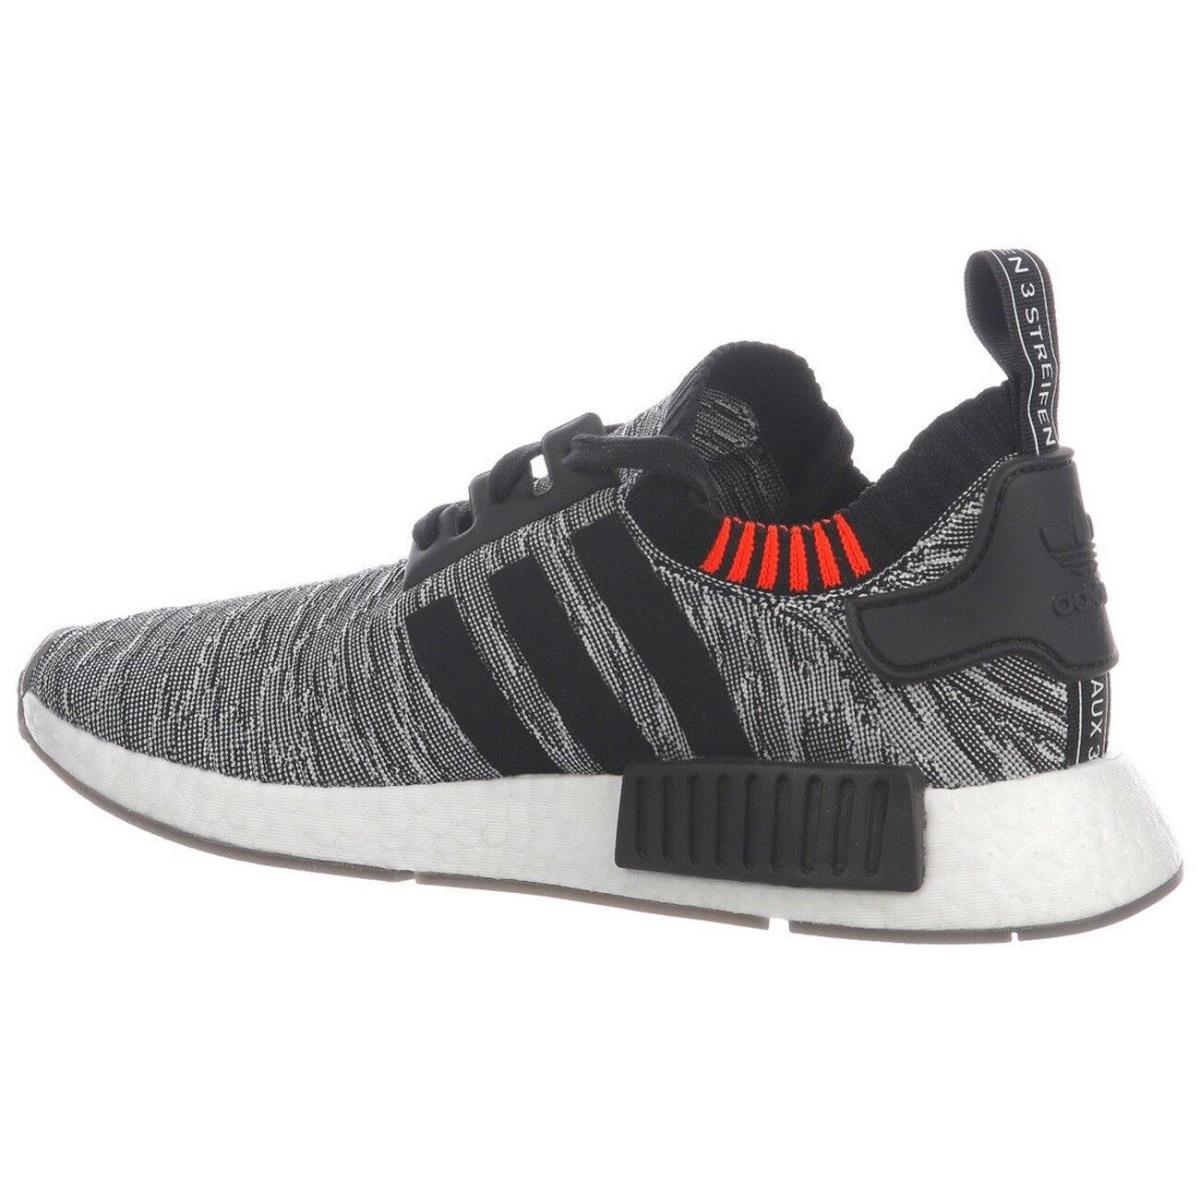 Adidas shoes NMD - Gray / Core Black 1